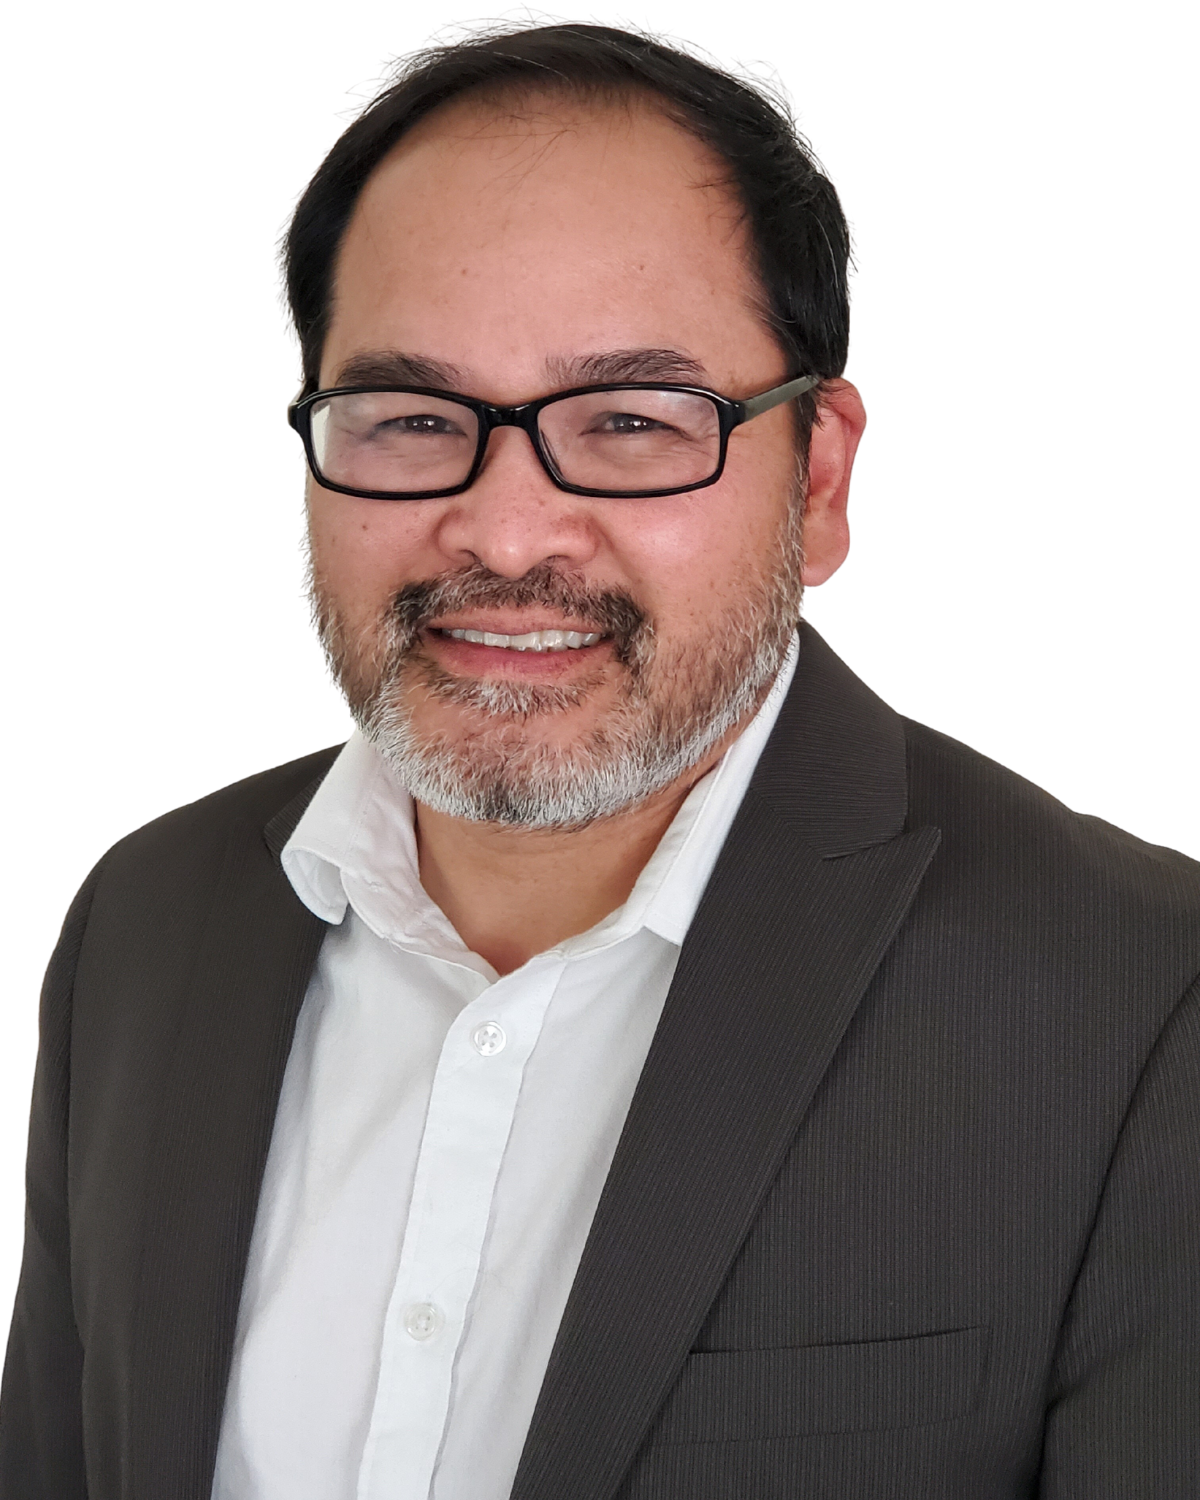 Headshot of HealthWest Executive Director Rich Francisco